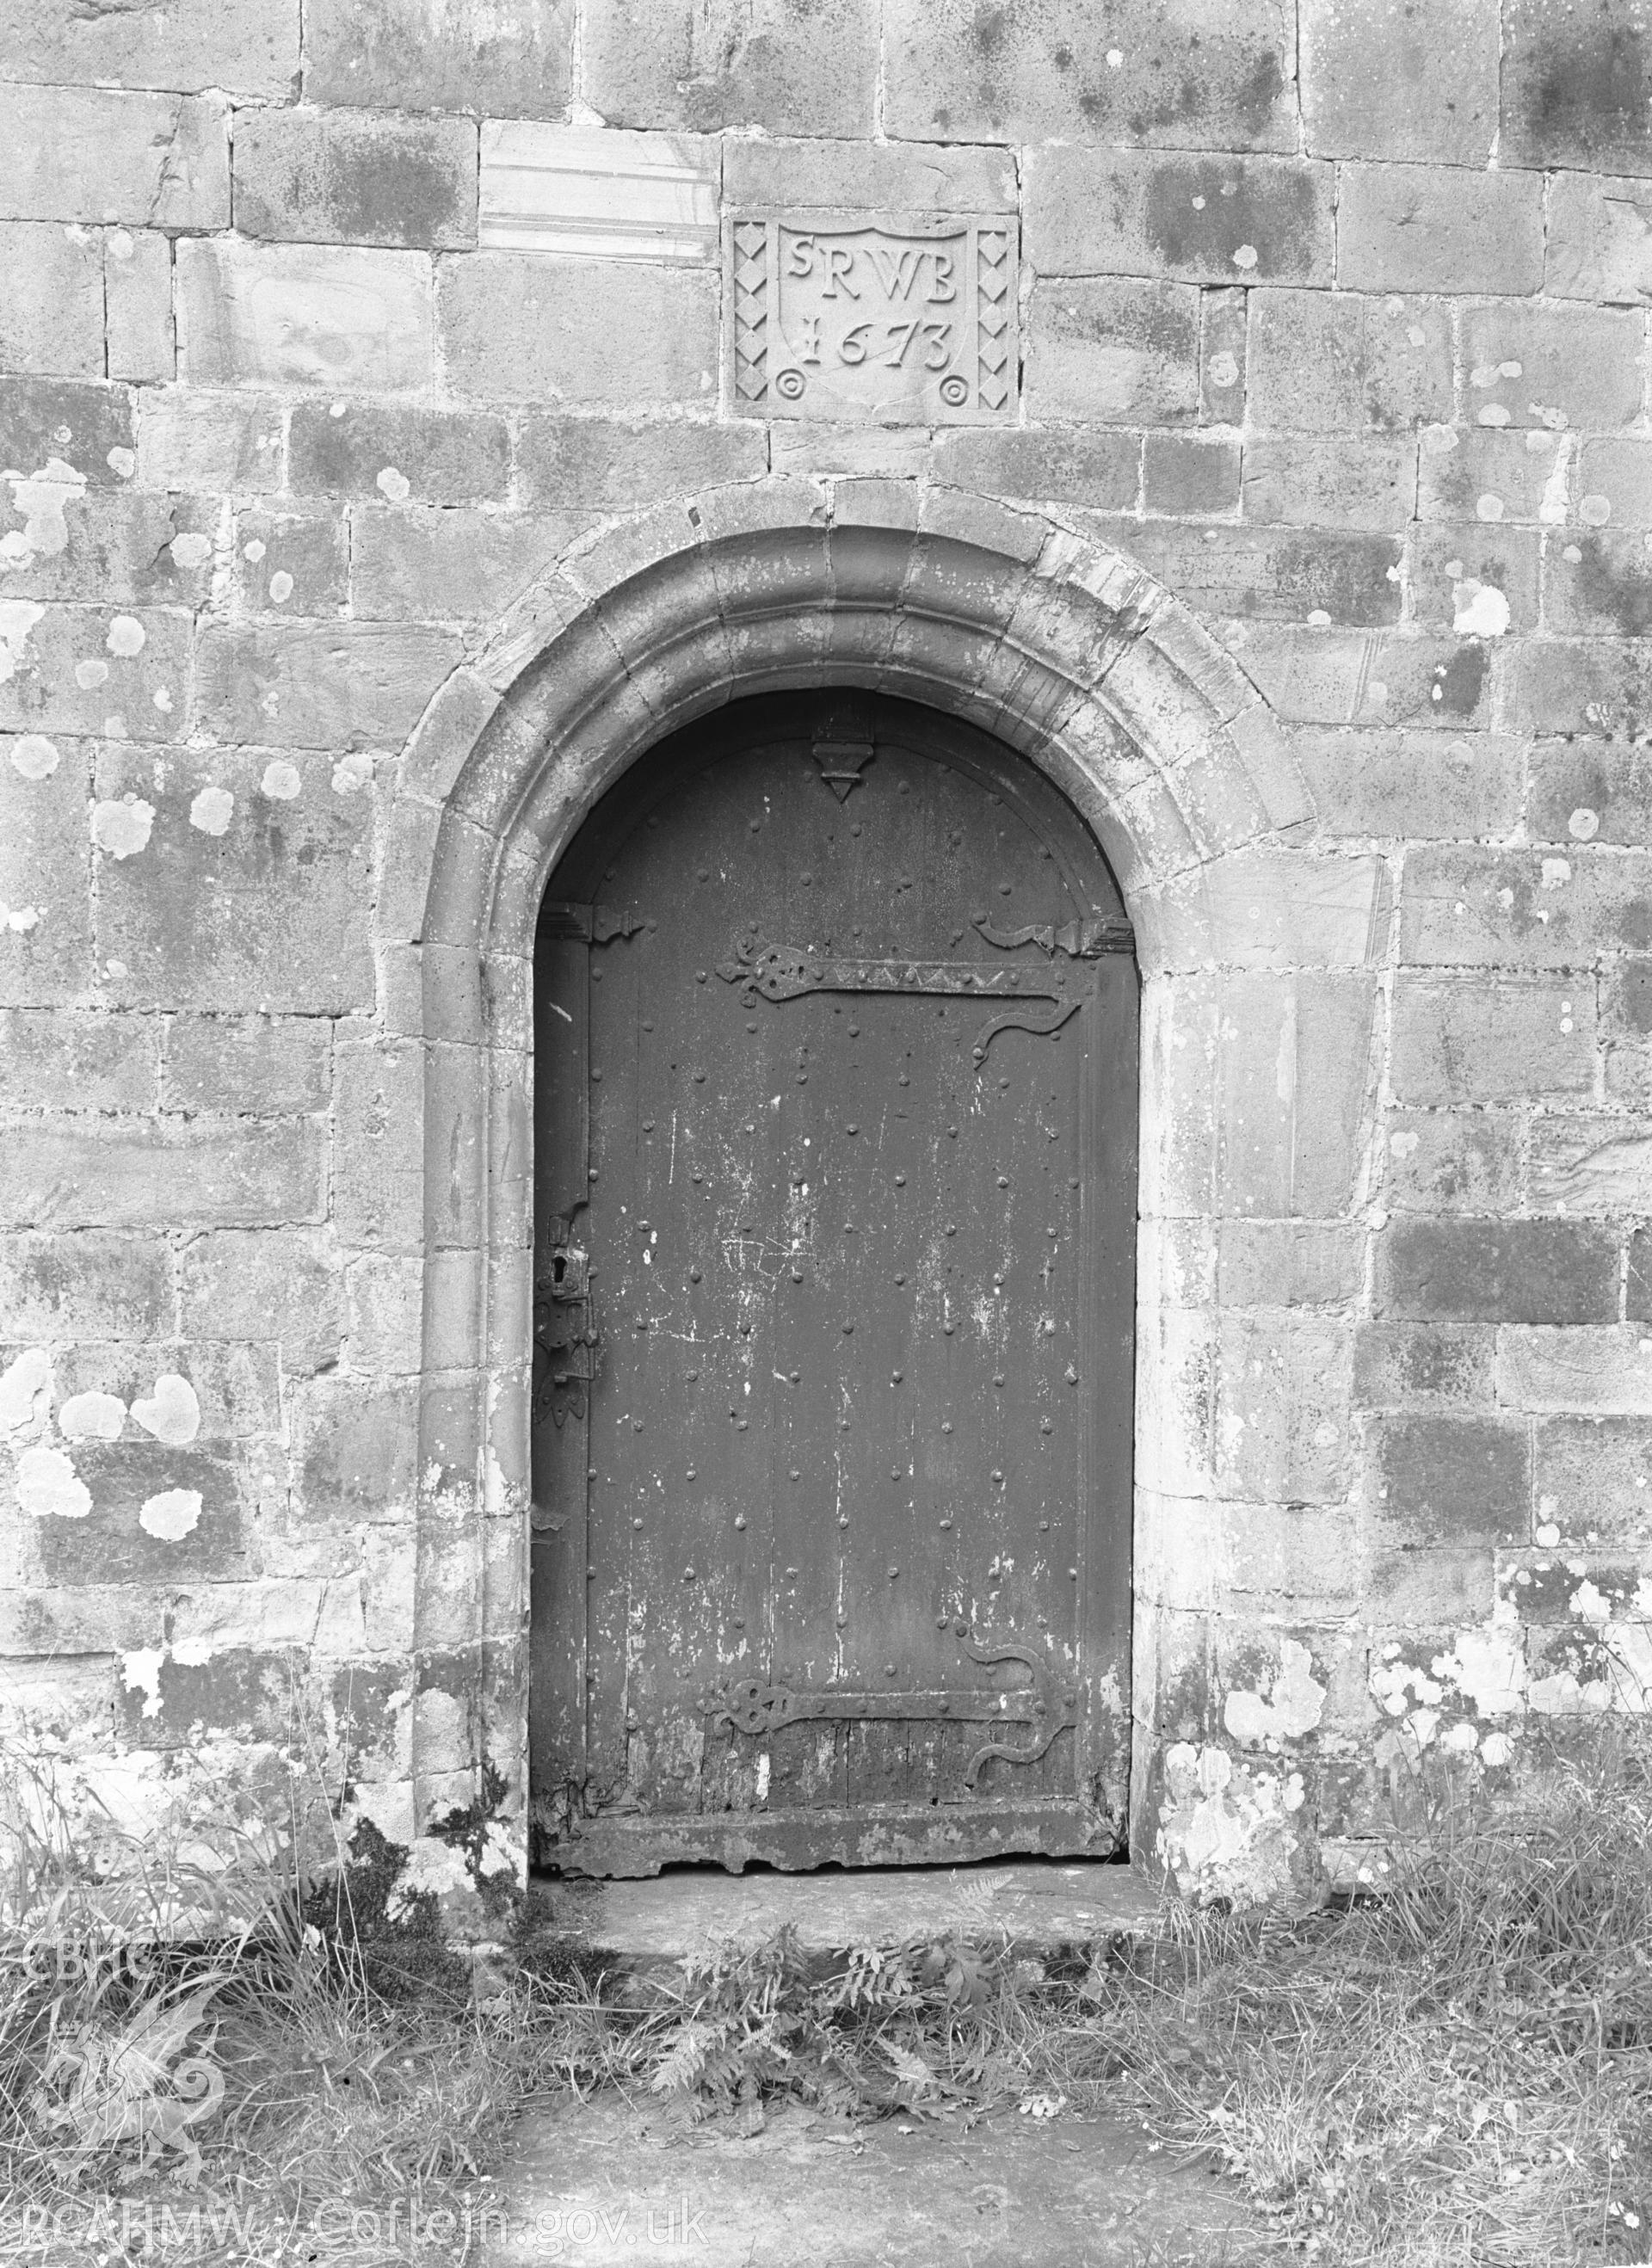 Exterior view showing nrth door,with inscription, SRWB 1673.